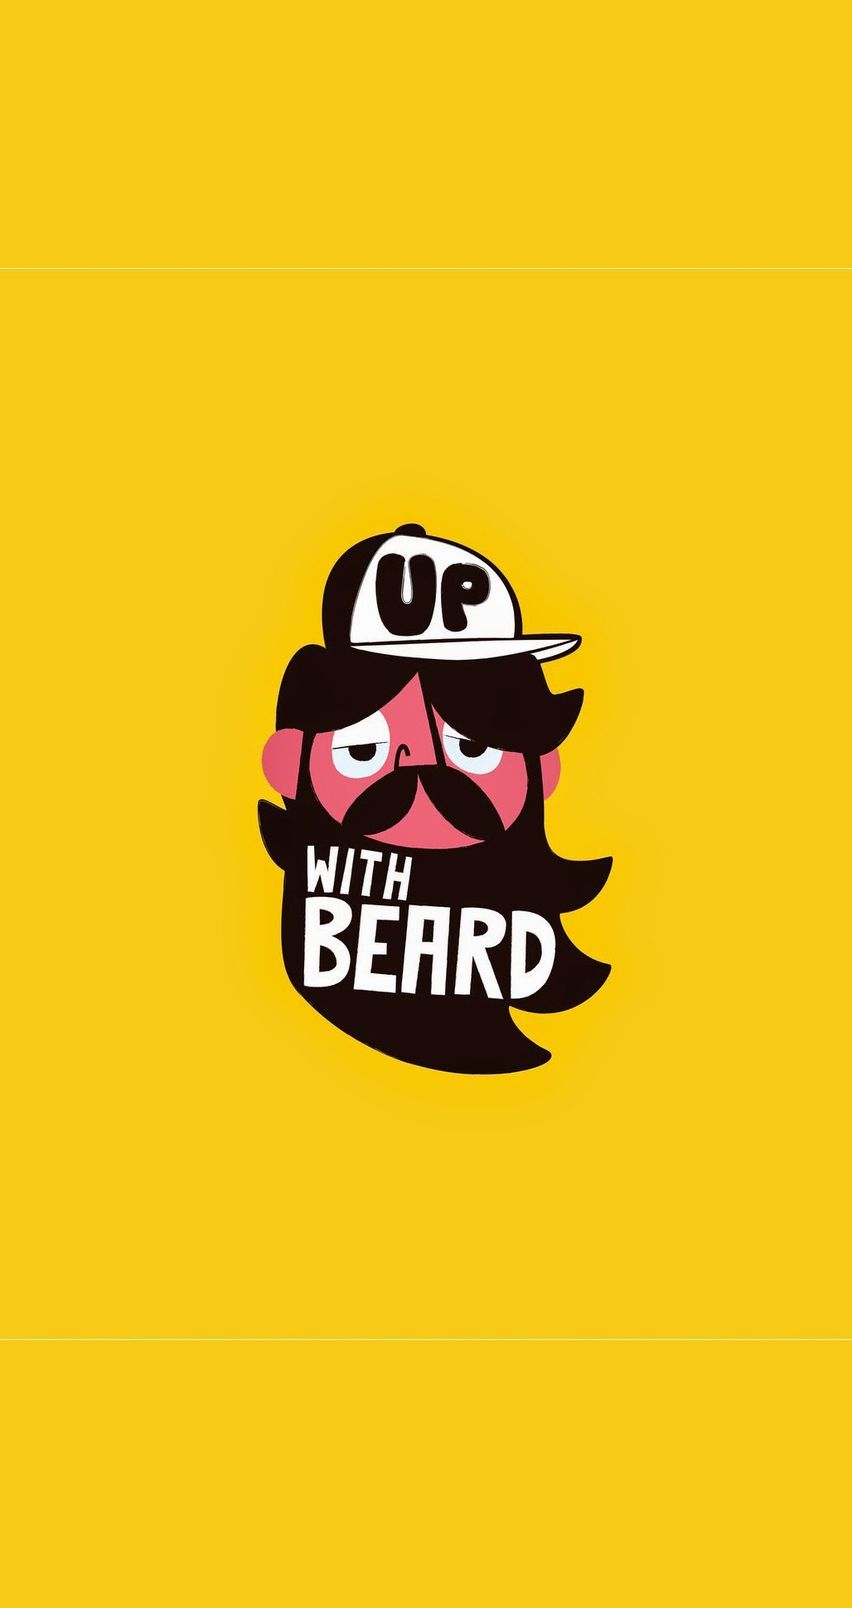 up with beard. Funny iphone wallpaper, Funny wallpaper, Cartoon wallpaper